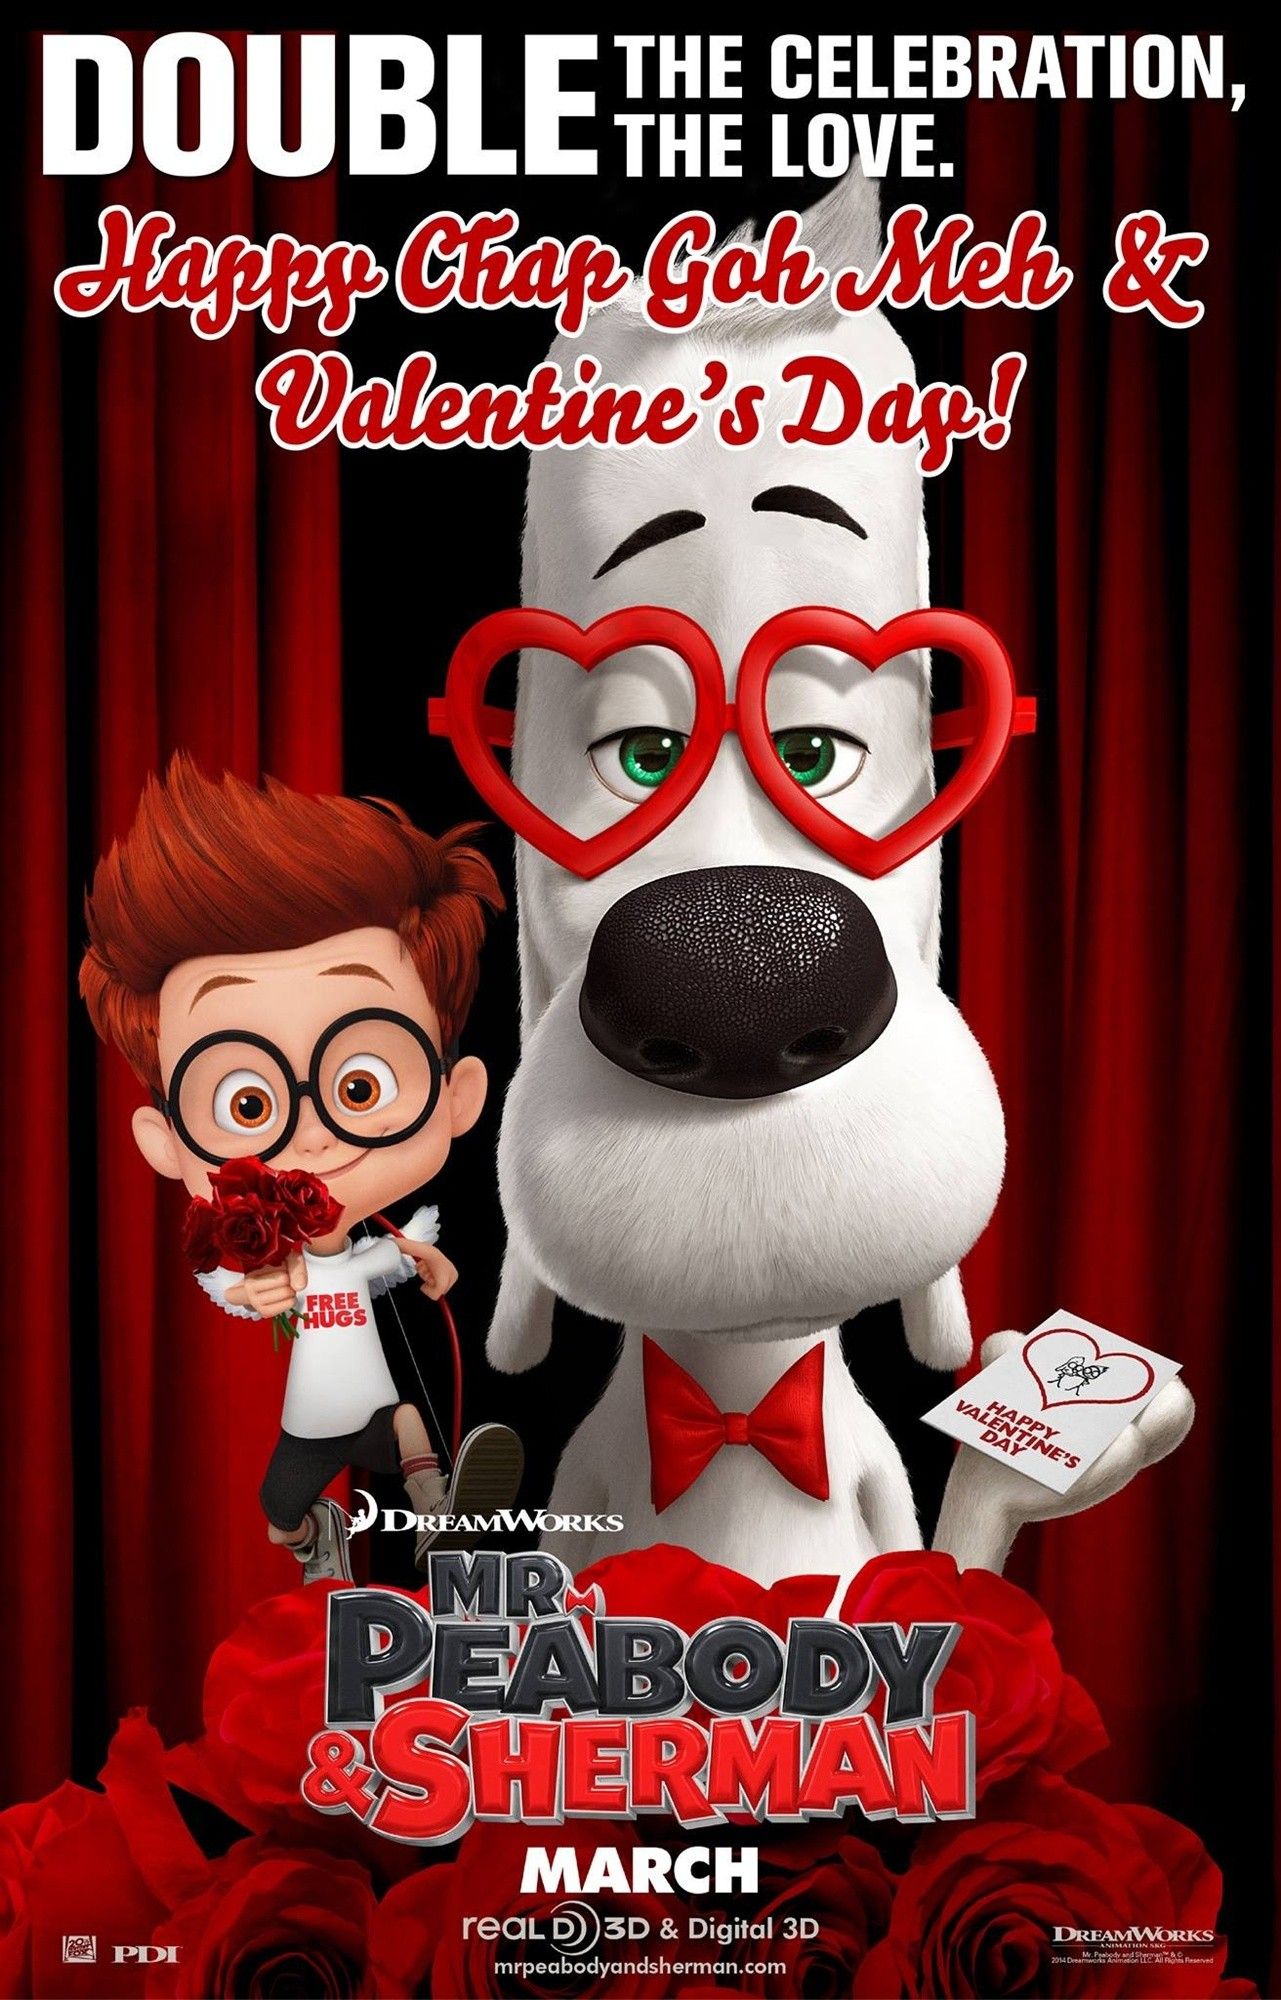 Poster of 20th Century Fox's Mr. Peabody & Sherman (2014)